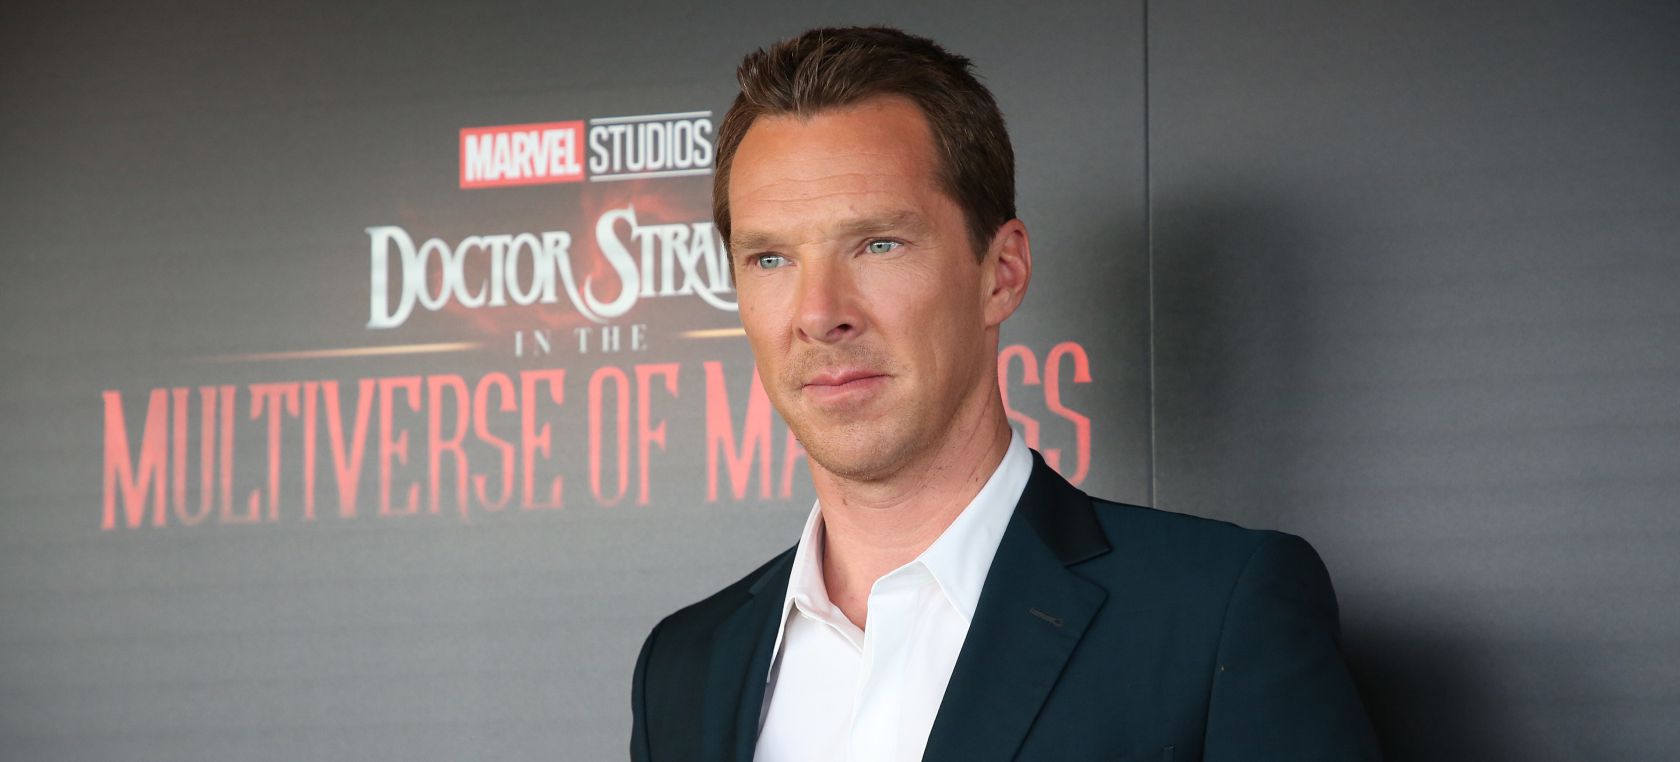 Benedict Cumberbatch rechazó otro papel en Marvel Studios mucho antes de ser Doctor Strange